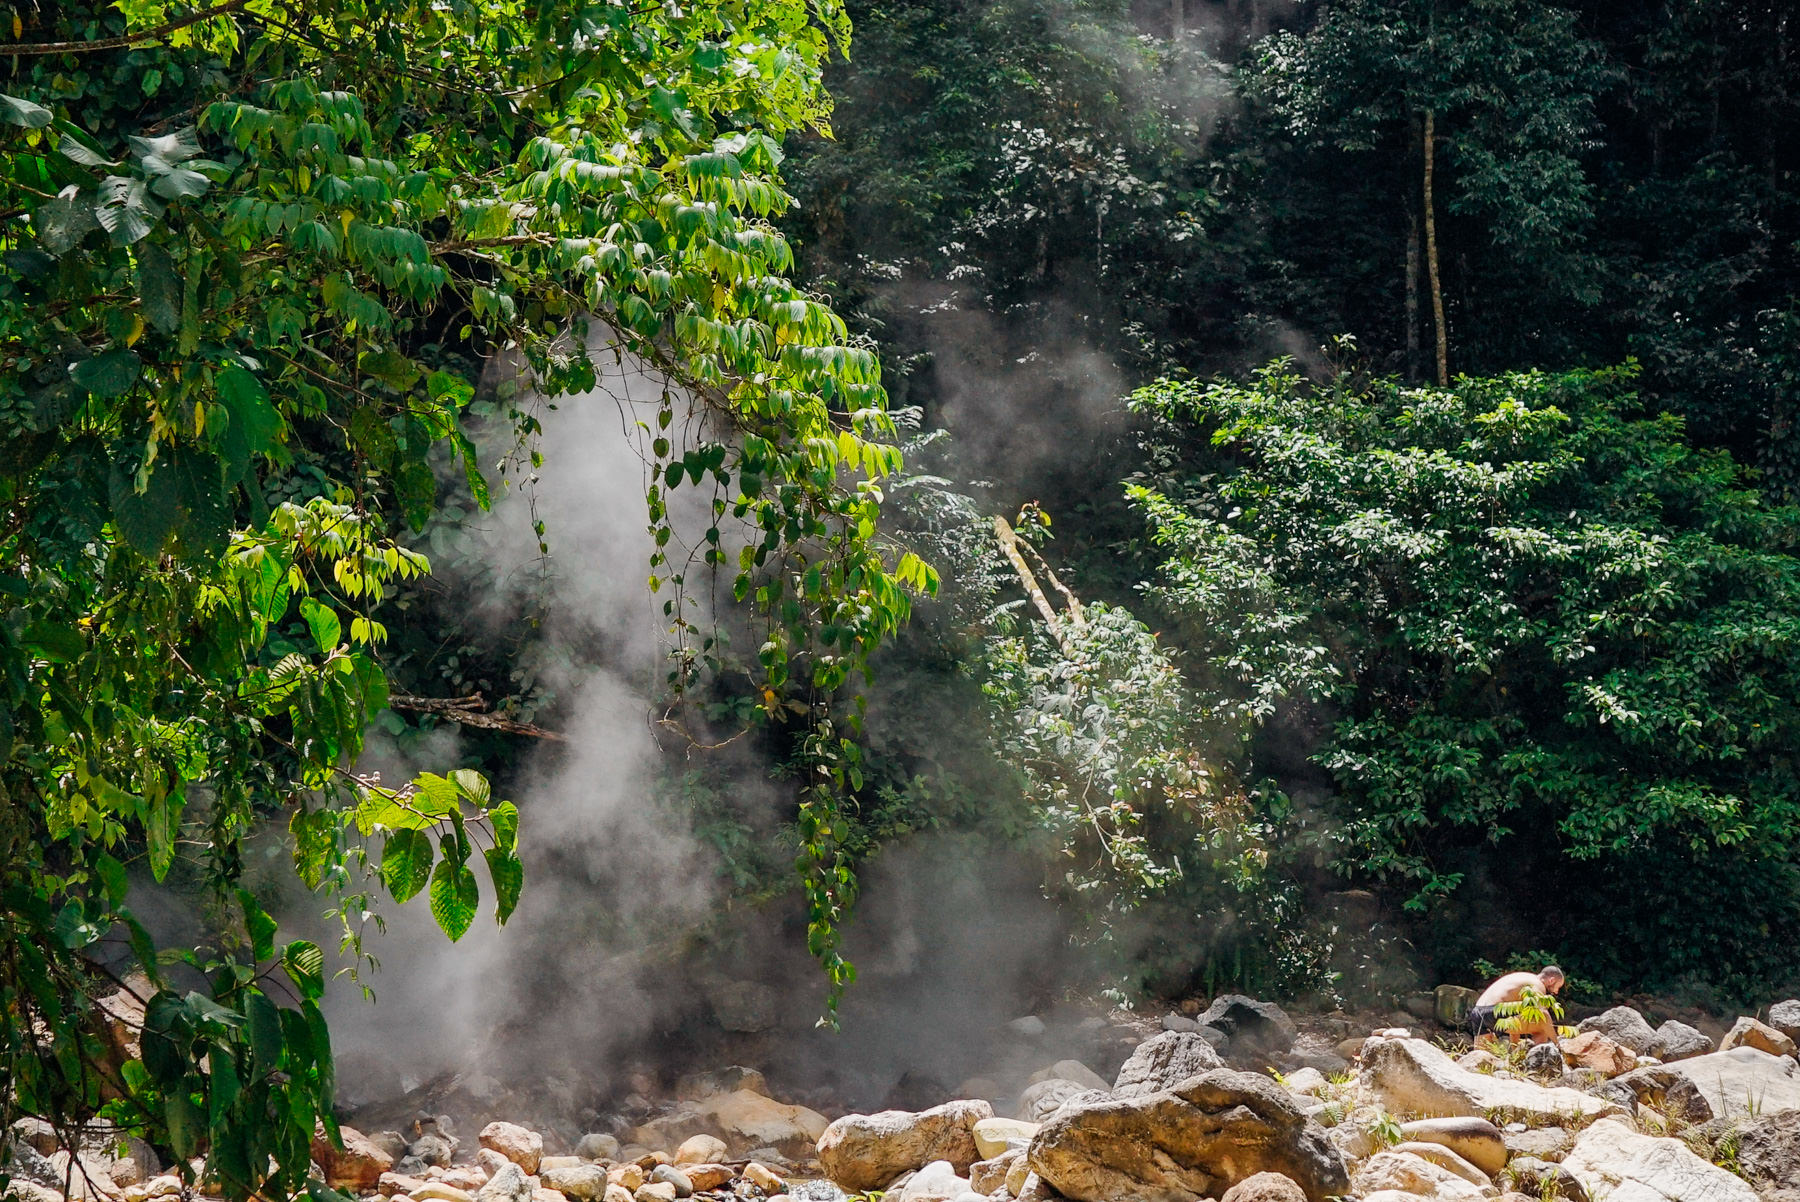 Hot spring in the Sumatra jungle